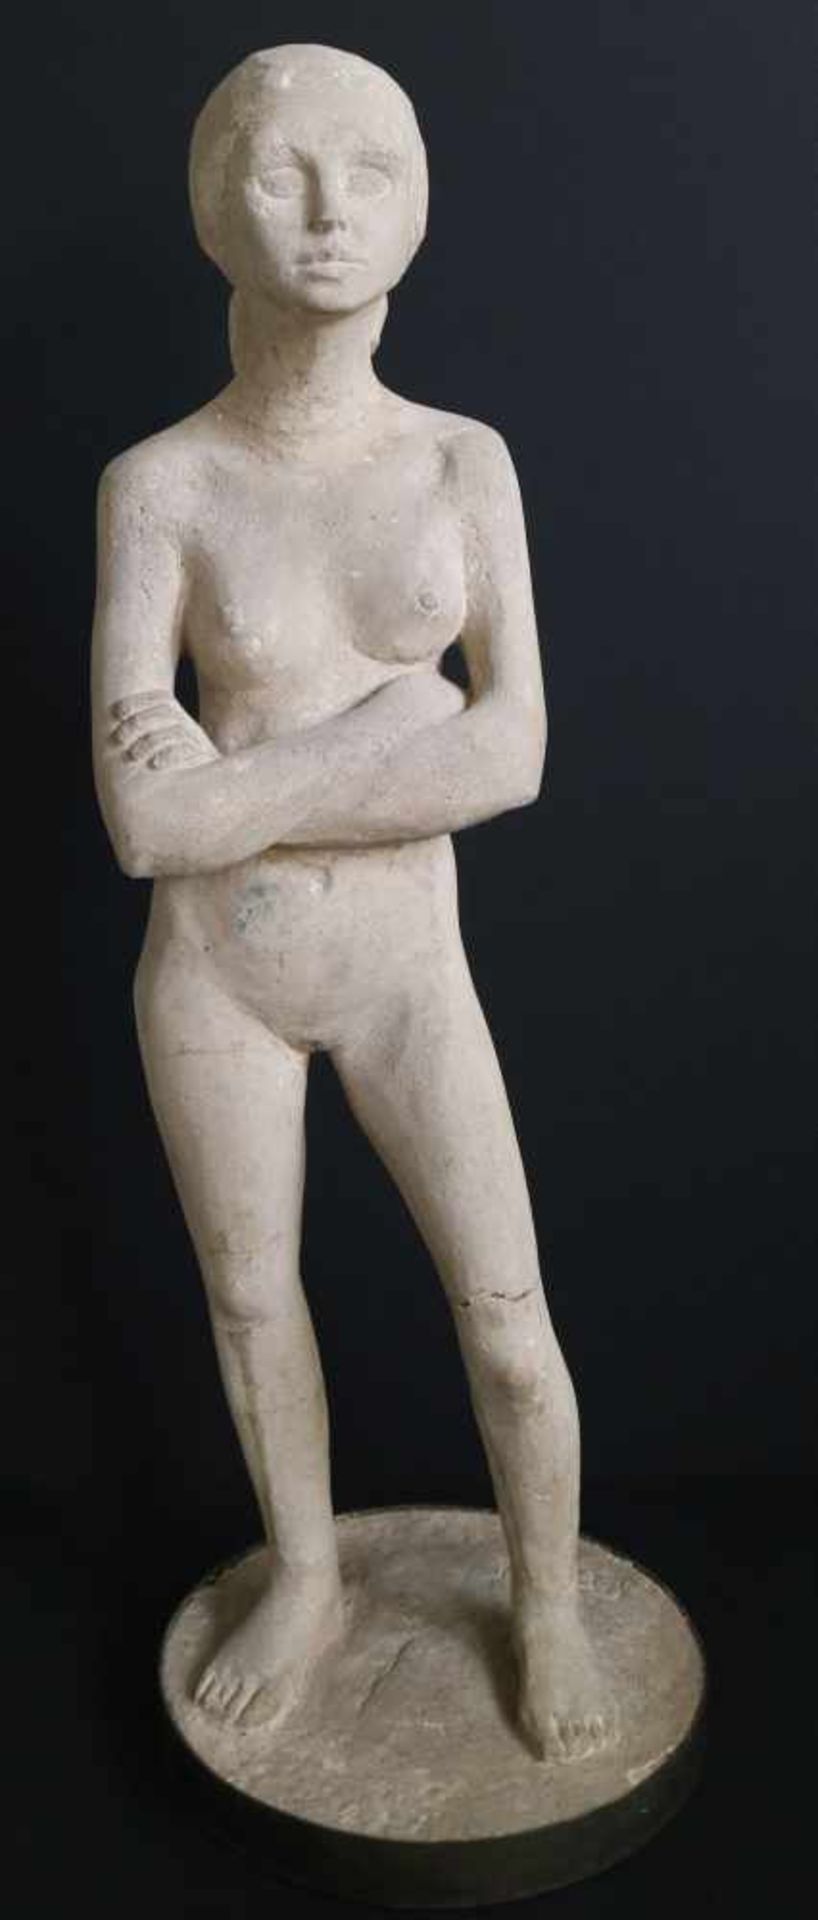 Sandstone statue of a nude